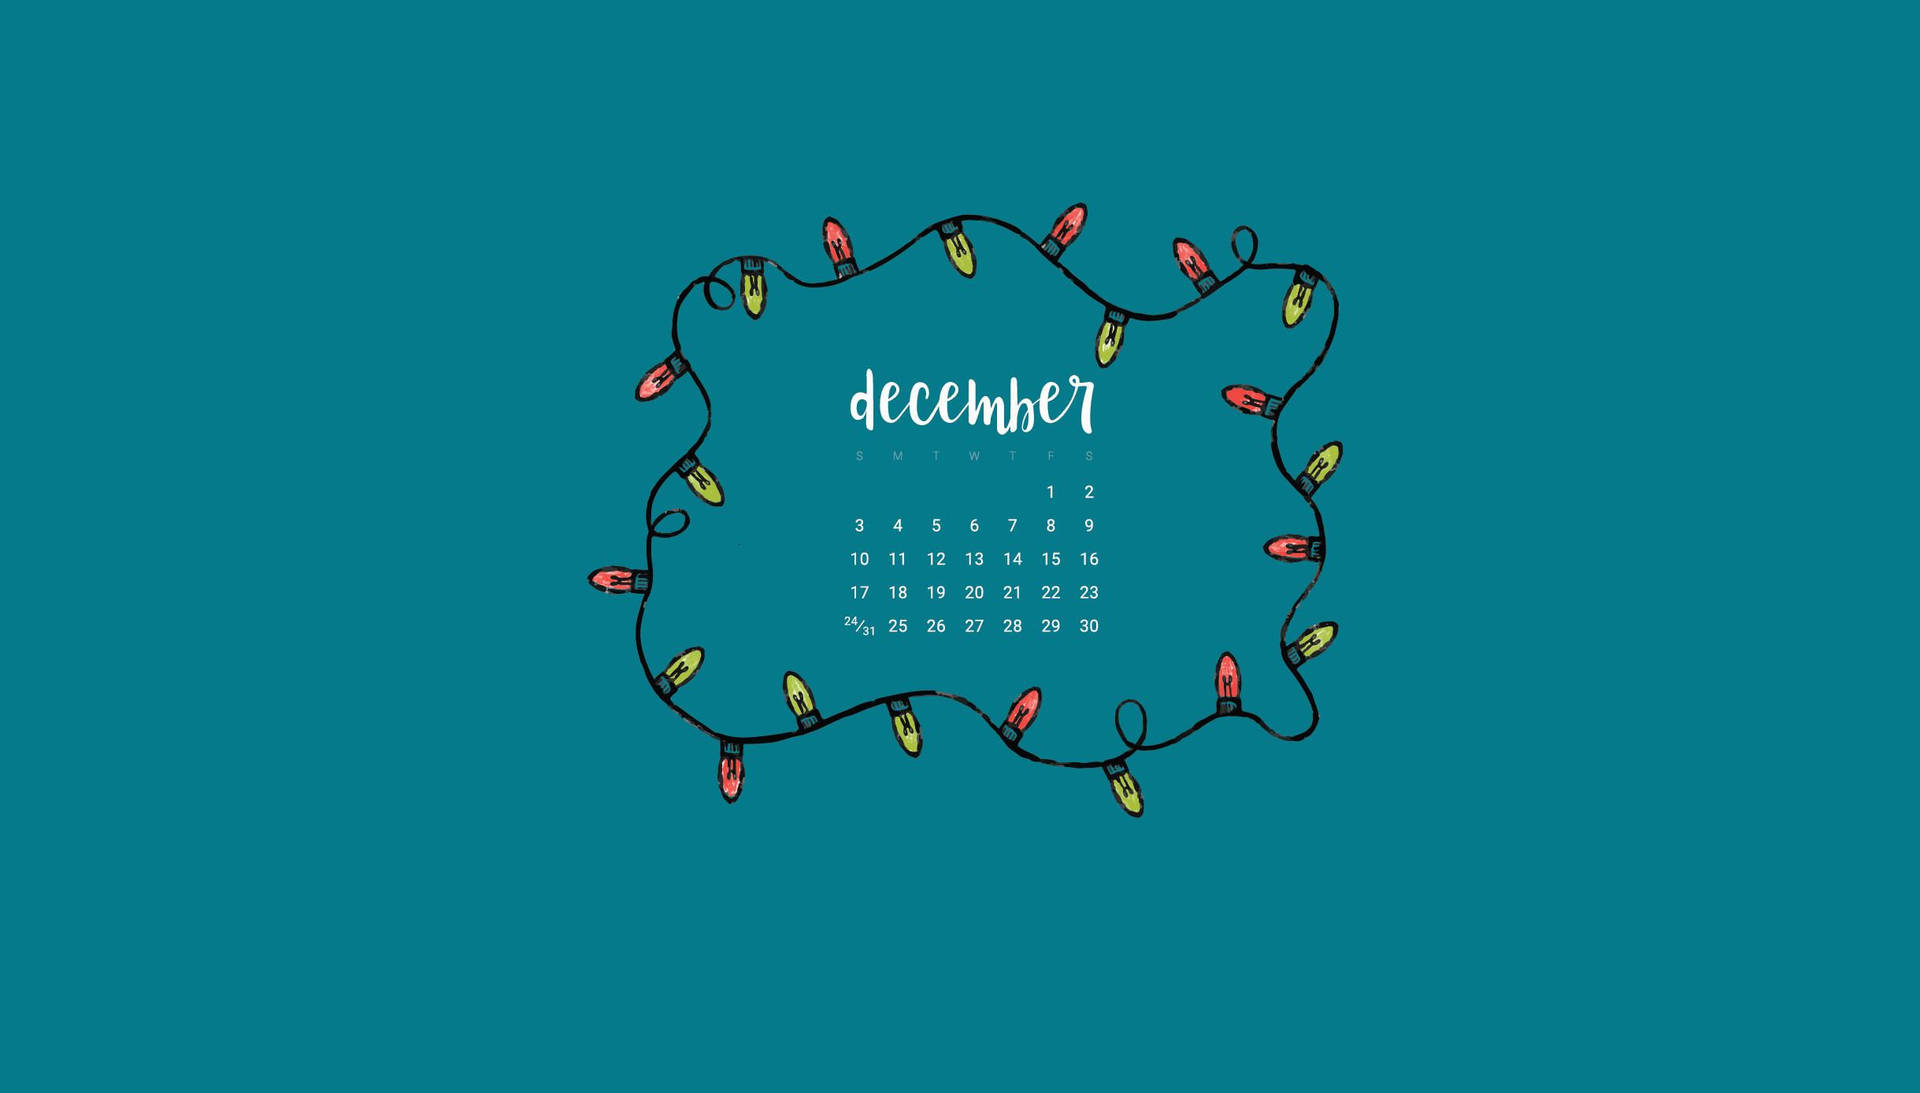 Merry Christmas December Calendar Aesthetic Teal